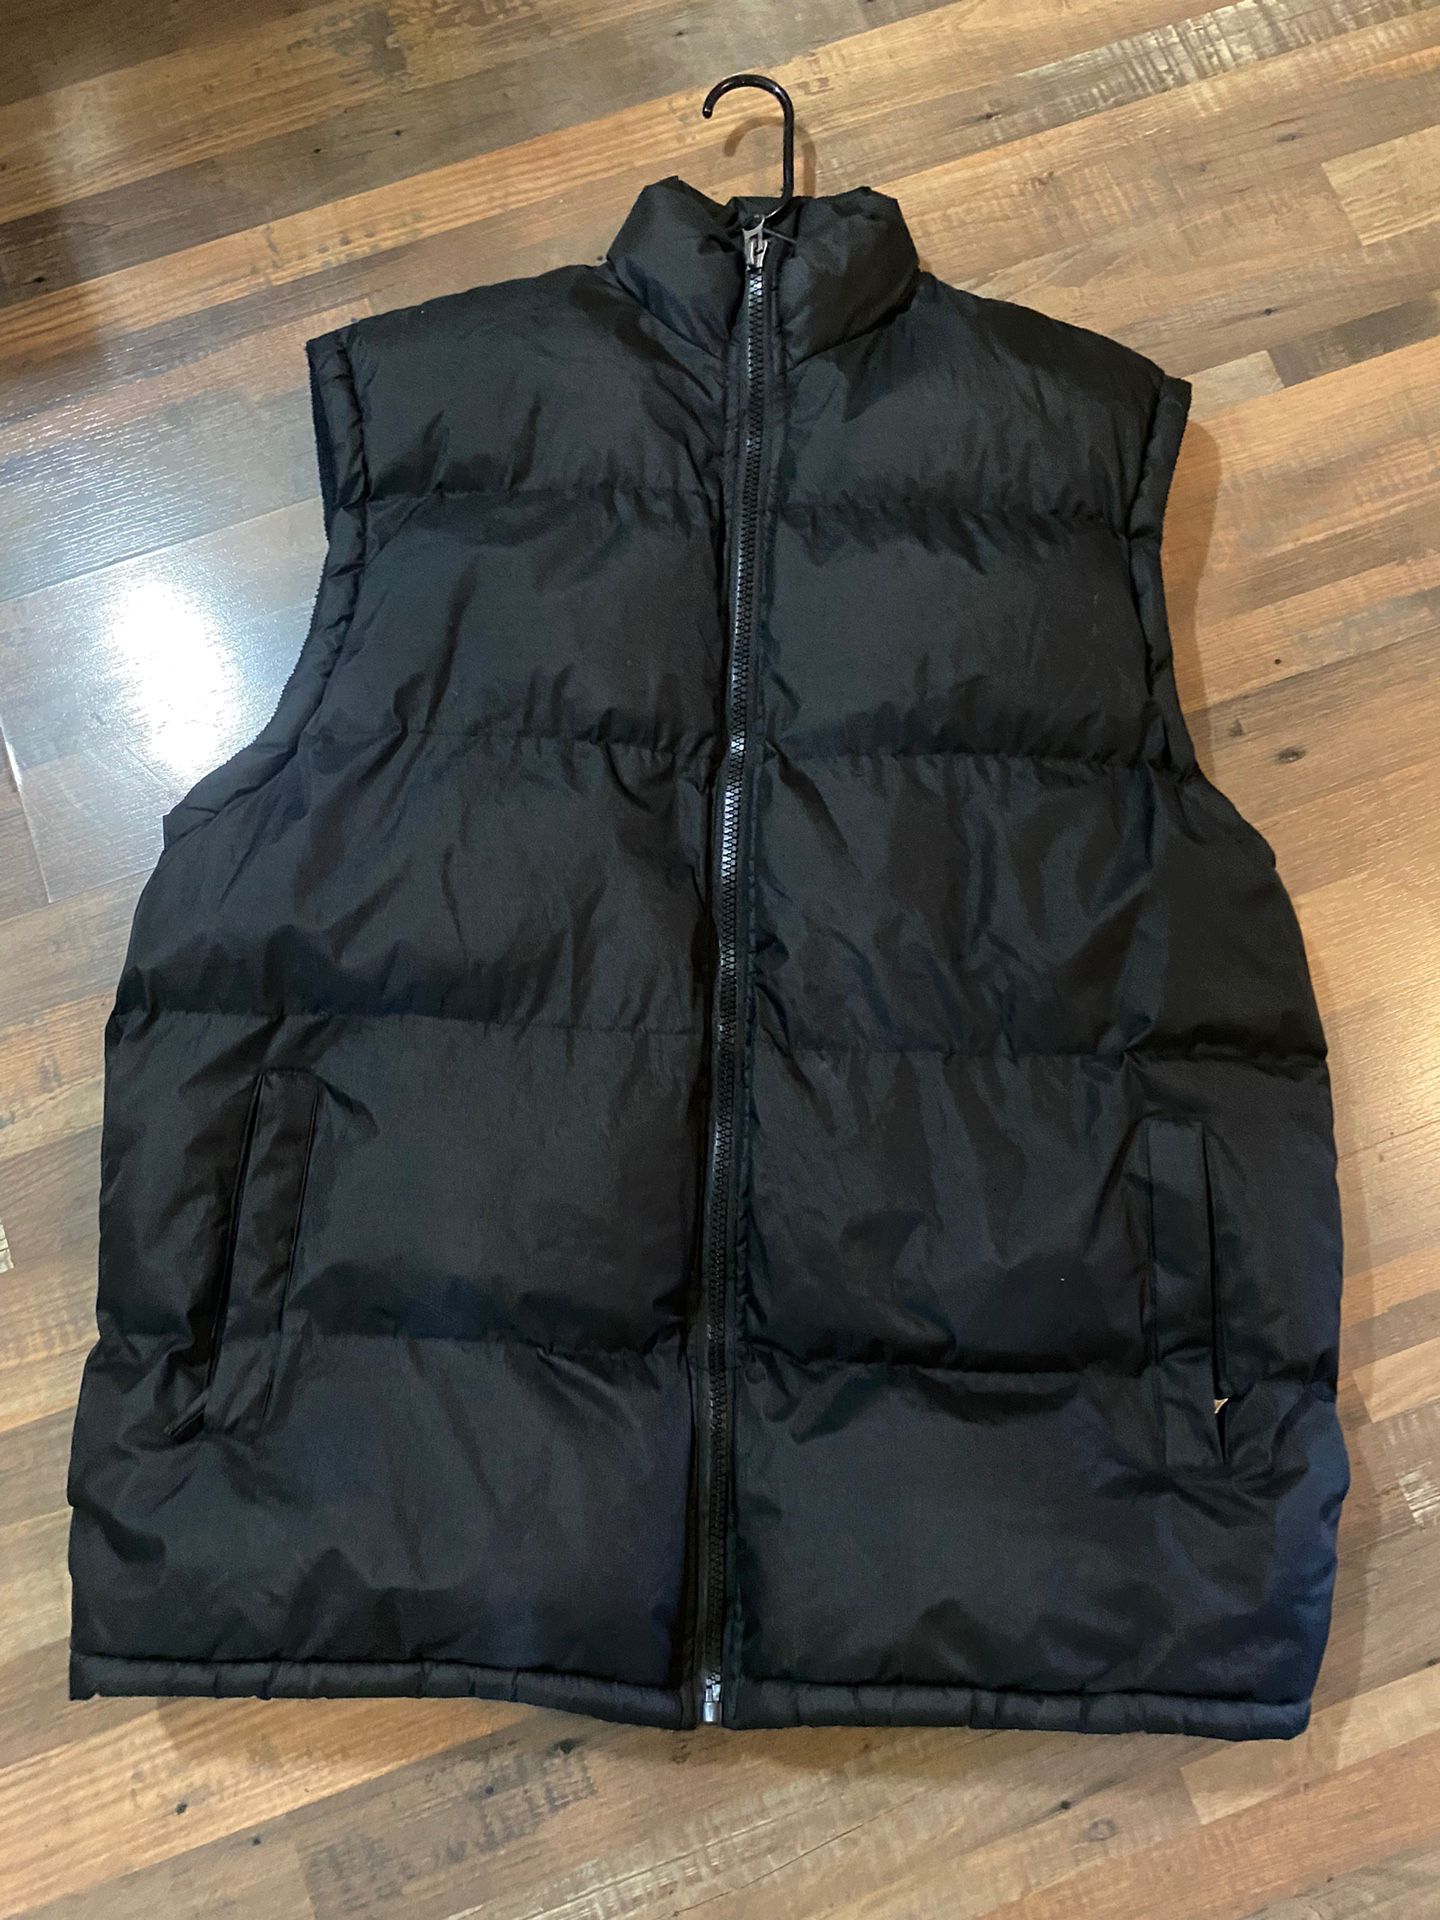 Advance Sport Puffer Vest Size XL